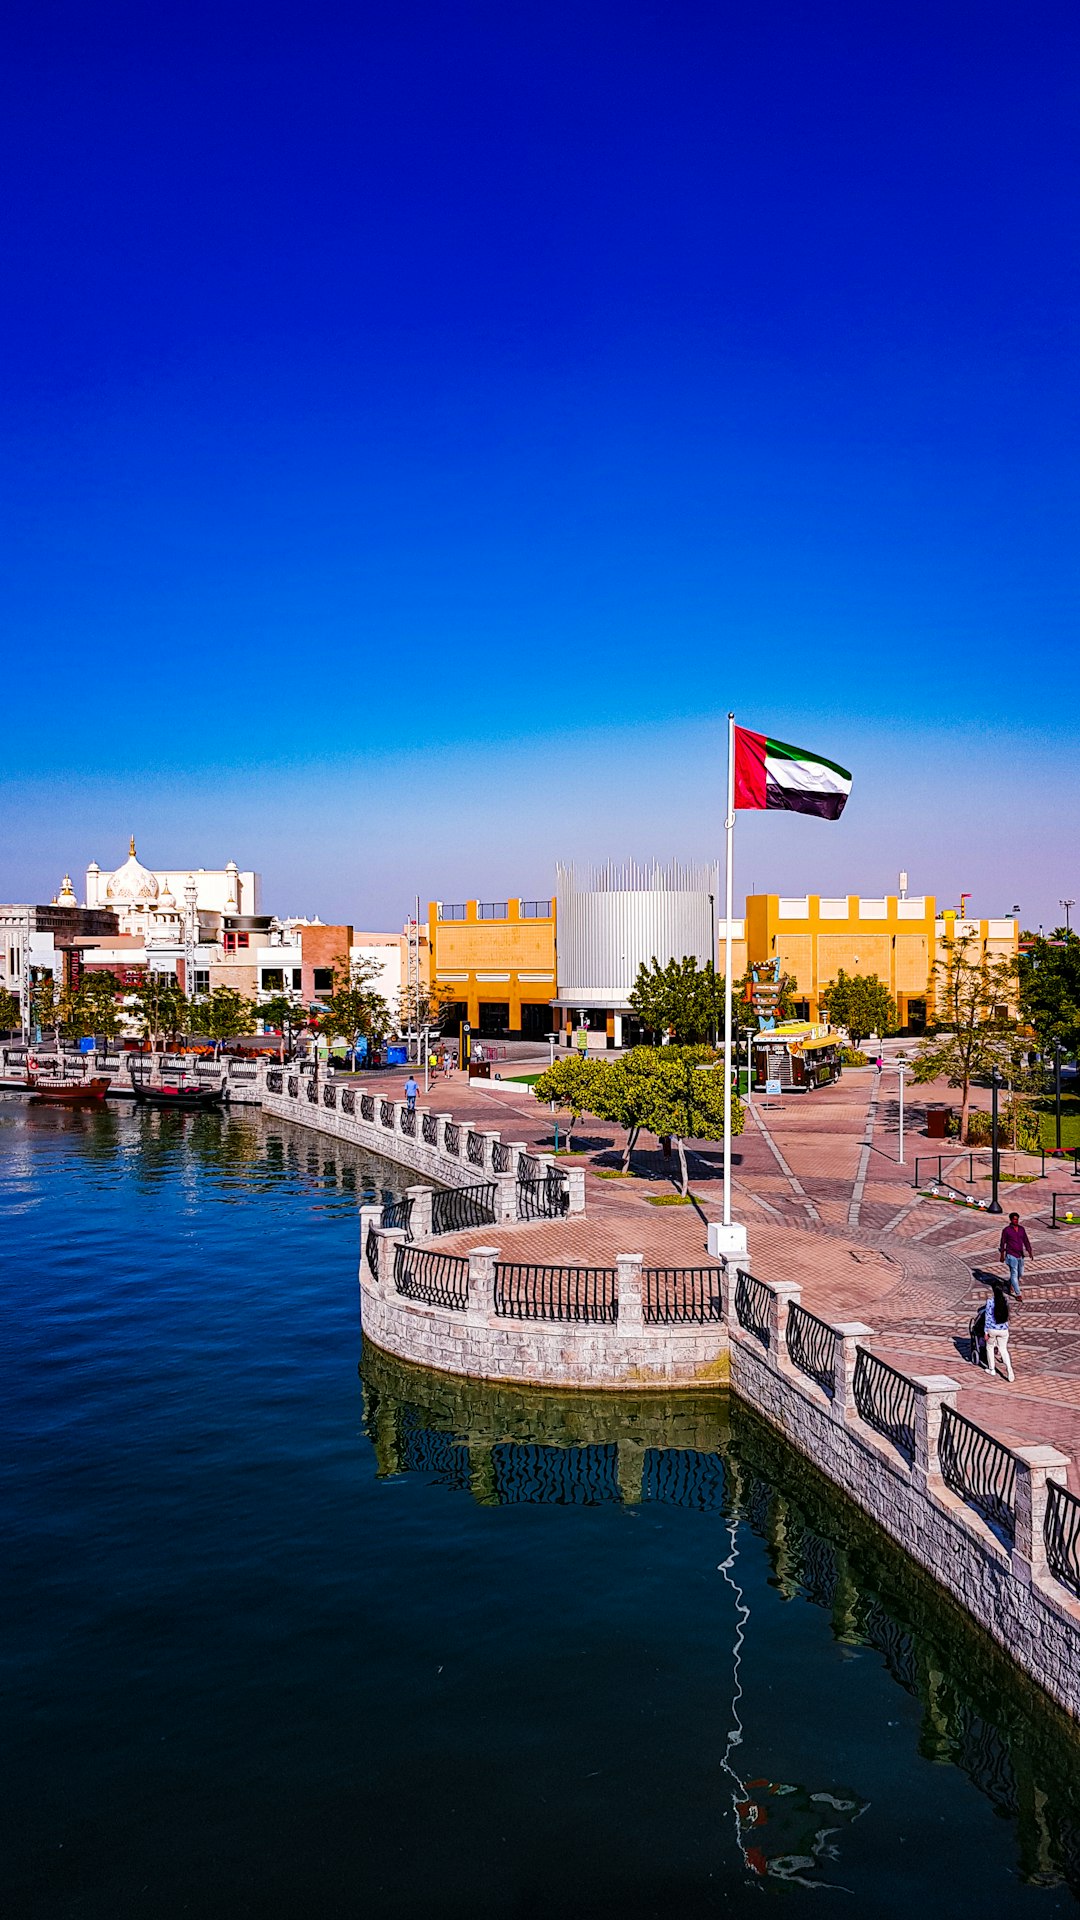 travelers stories about Town in Riverland Dubai - Sheikh Zayed Road - Dubai - United Arab Emirates, United Arab Emirates